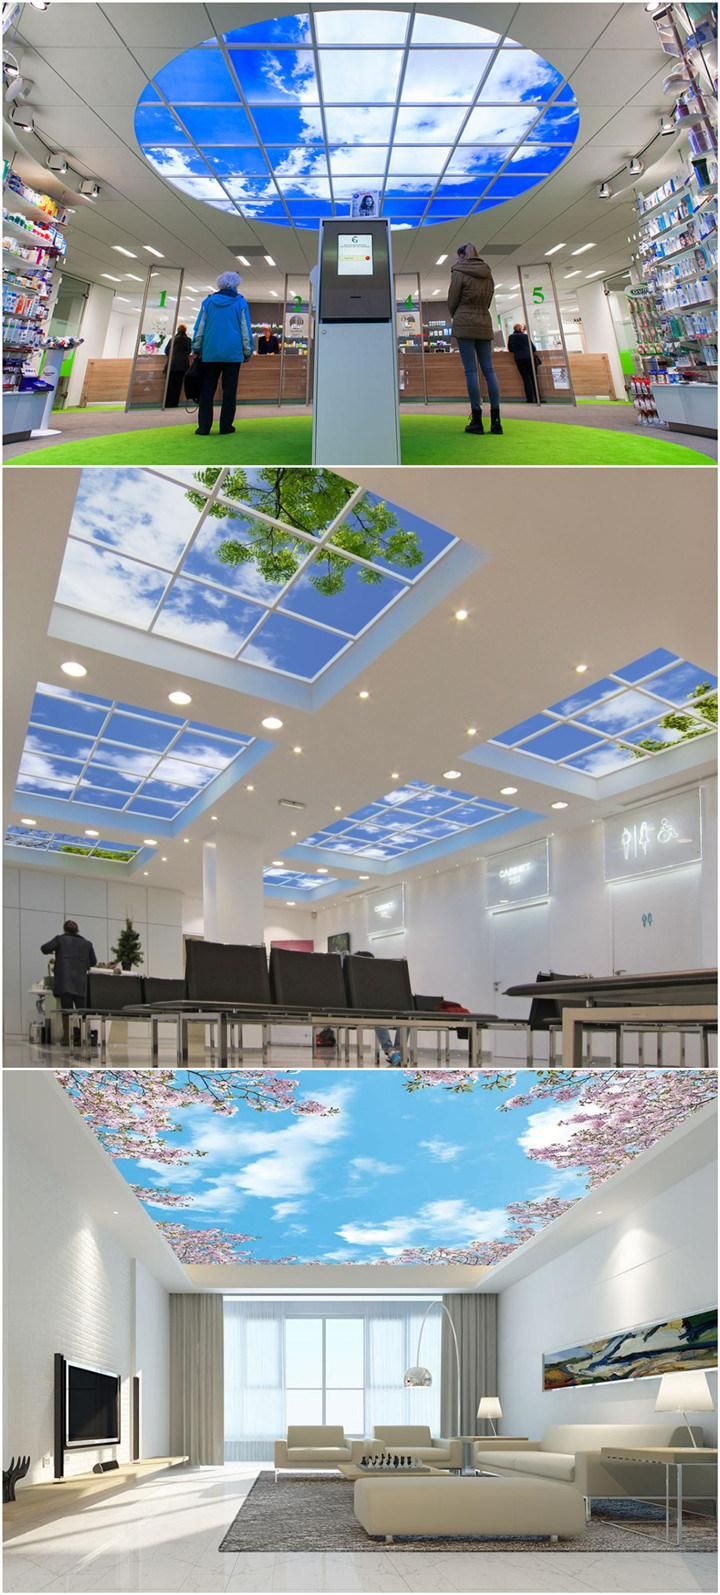 Ra>90 Bluesky/White Clouds Frameless LED Skylight Ceiling Panel for Decoration